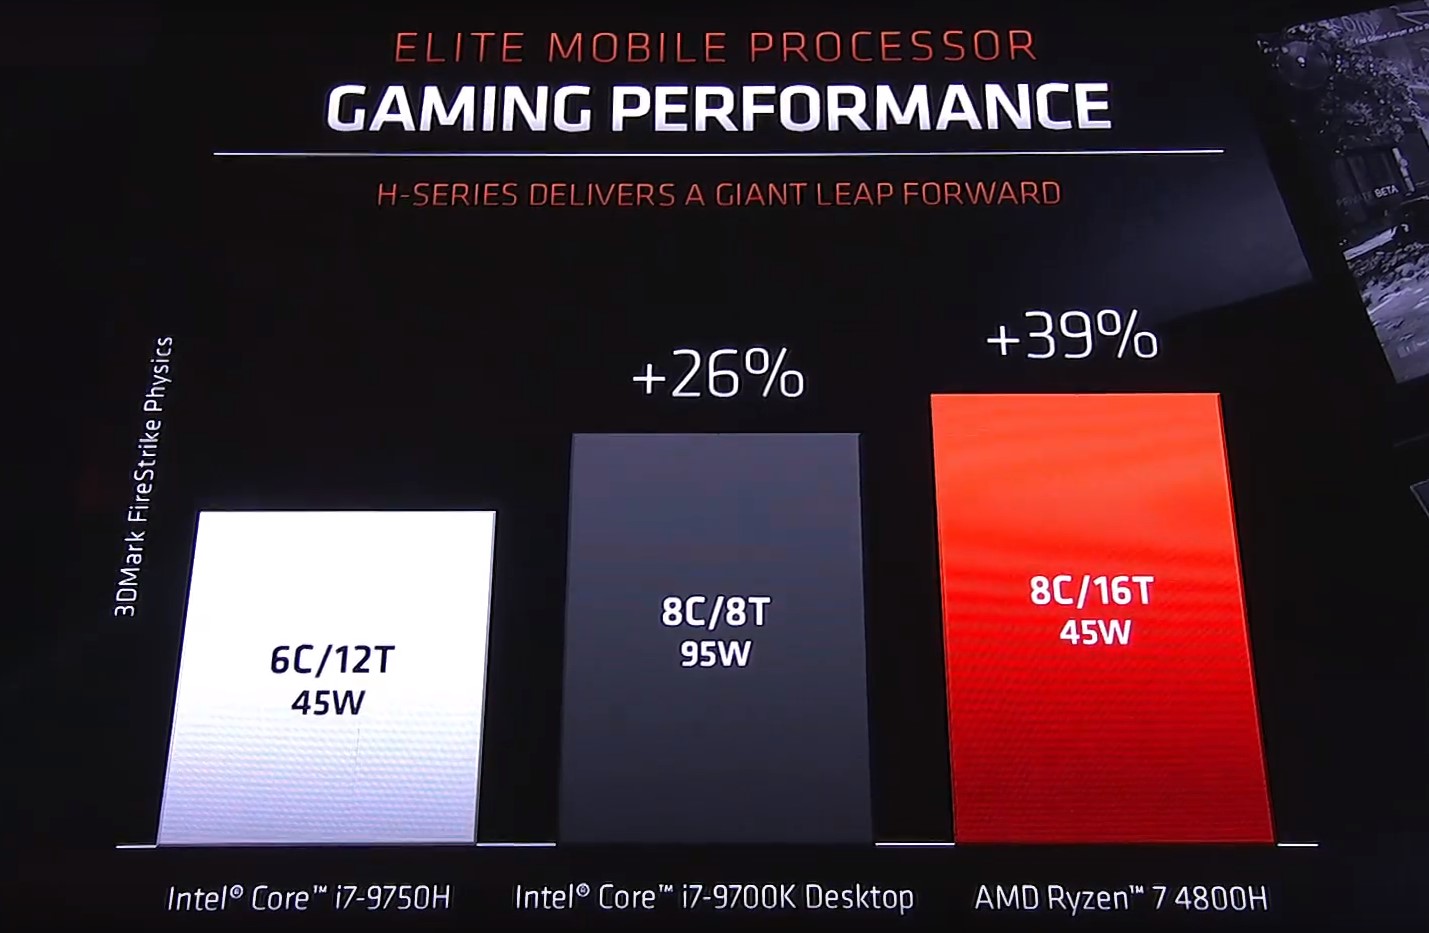 AMD SmartShift